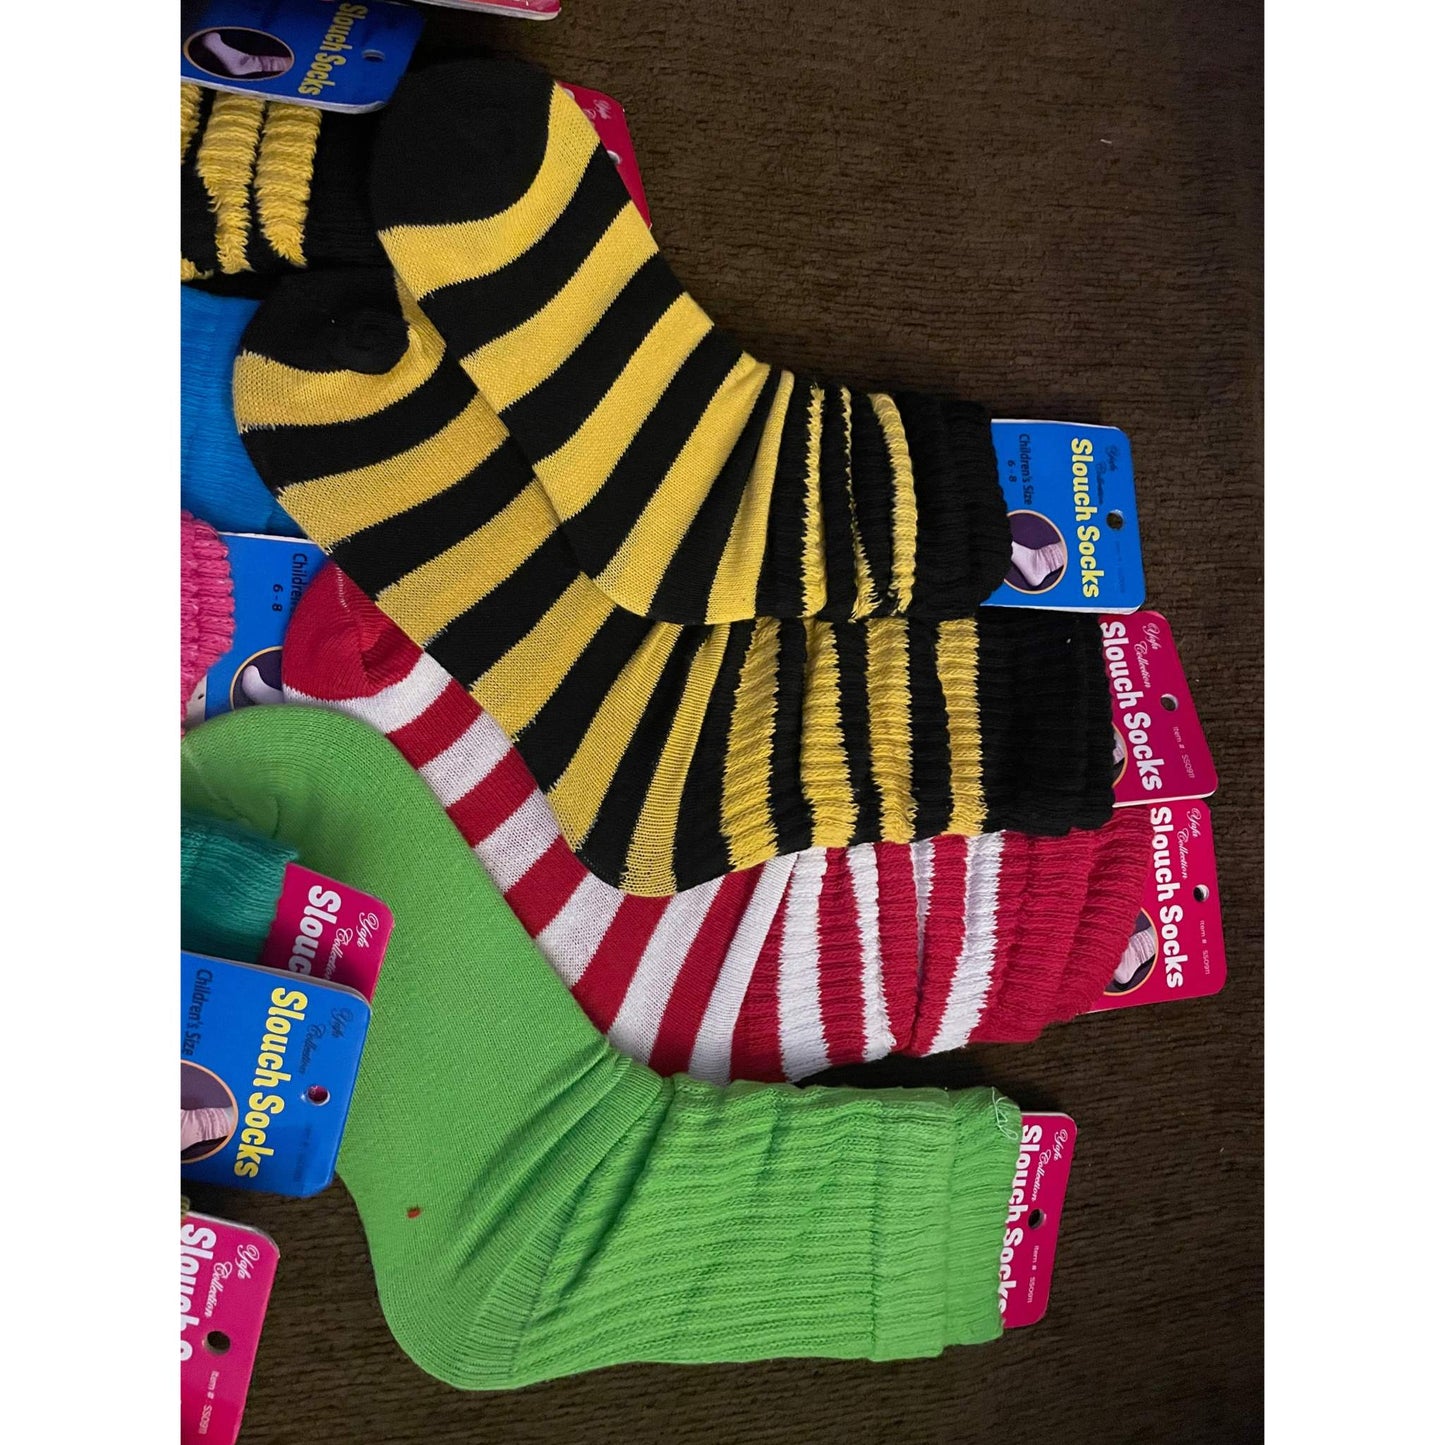 Yafa Collection Slouch Socks Adults Size 9-11 And children's size 6-8 - Selzalot